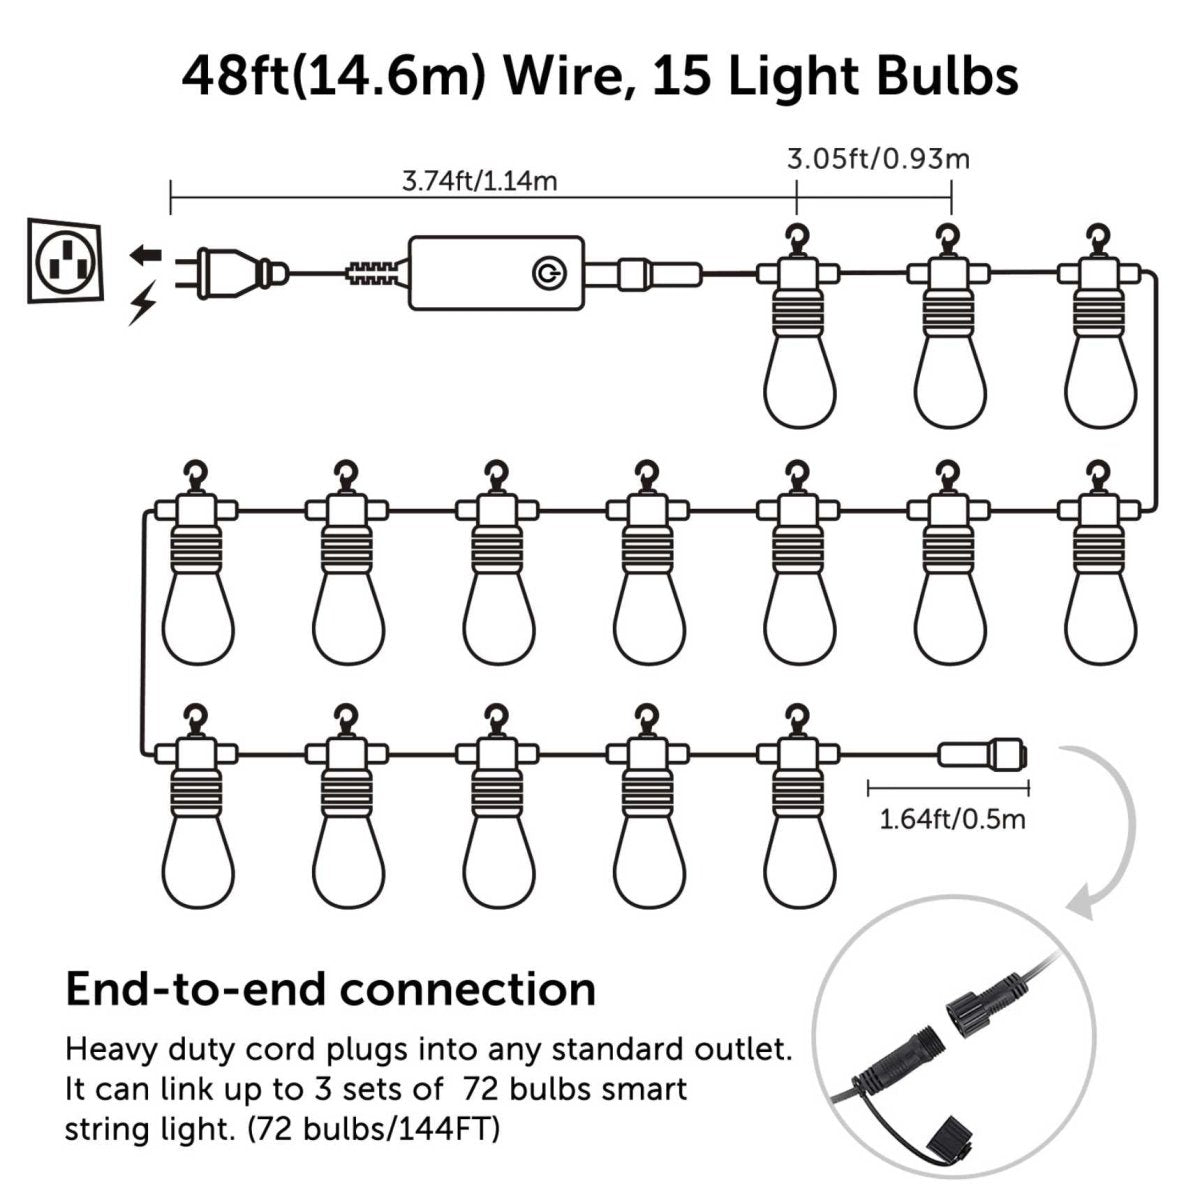 Eco4life LBS800 Wi-Fi Outdoor Patio Lights 15 Smart RGB LED bulbs 48FT